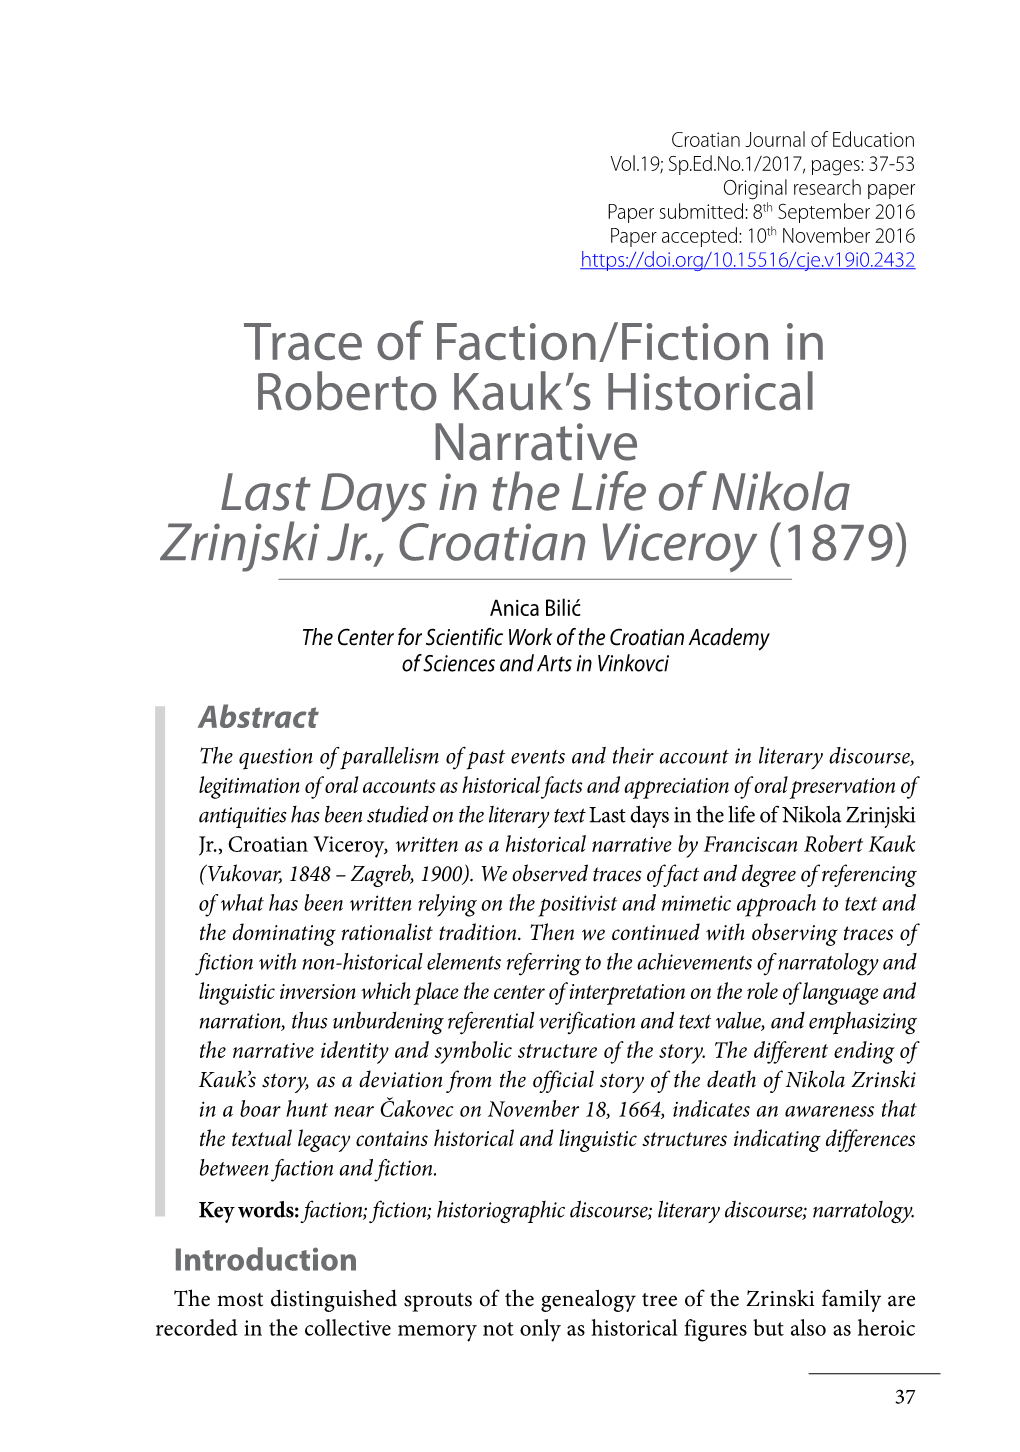 Trace of Faction/Fiction in Roberto Kauk's Historical Narrative Last